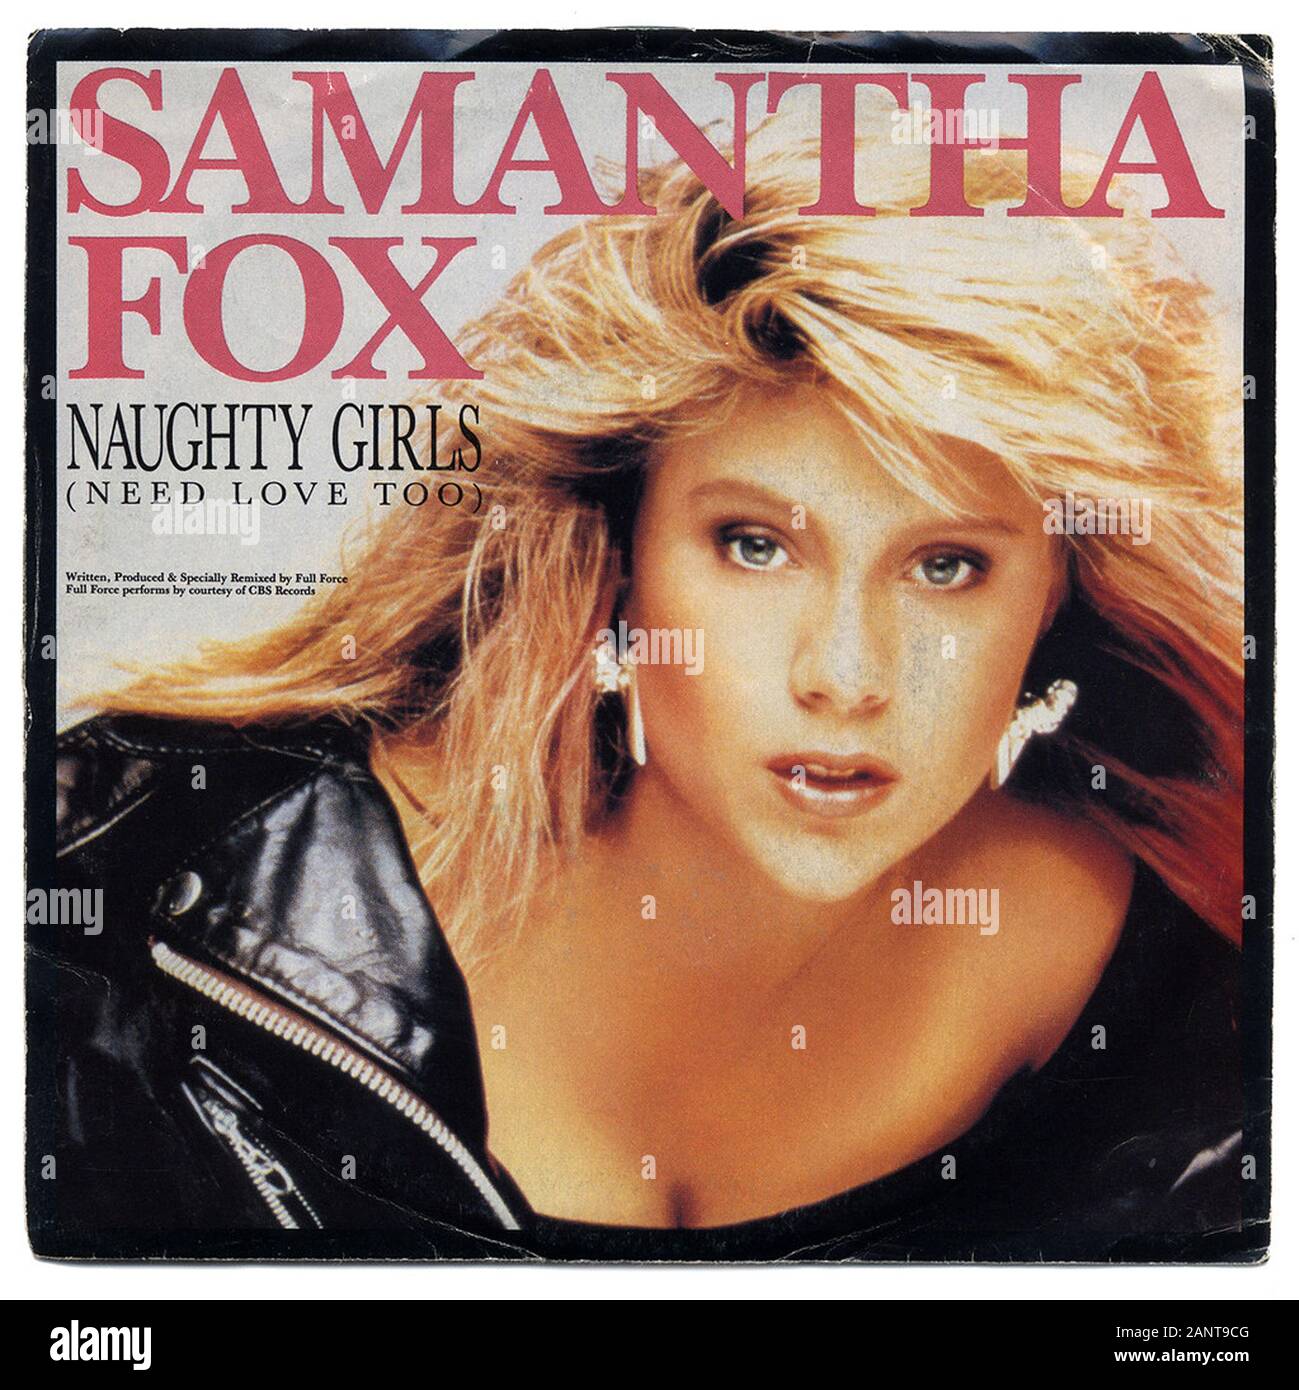 Samantha Fox - Naughty Girls (Need Love Too) - Classic vintage Vinyl Album Stockfoto